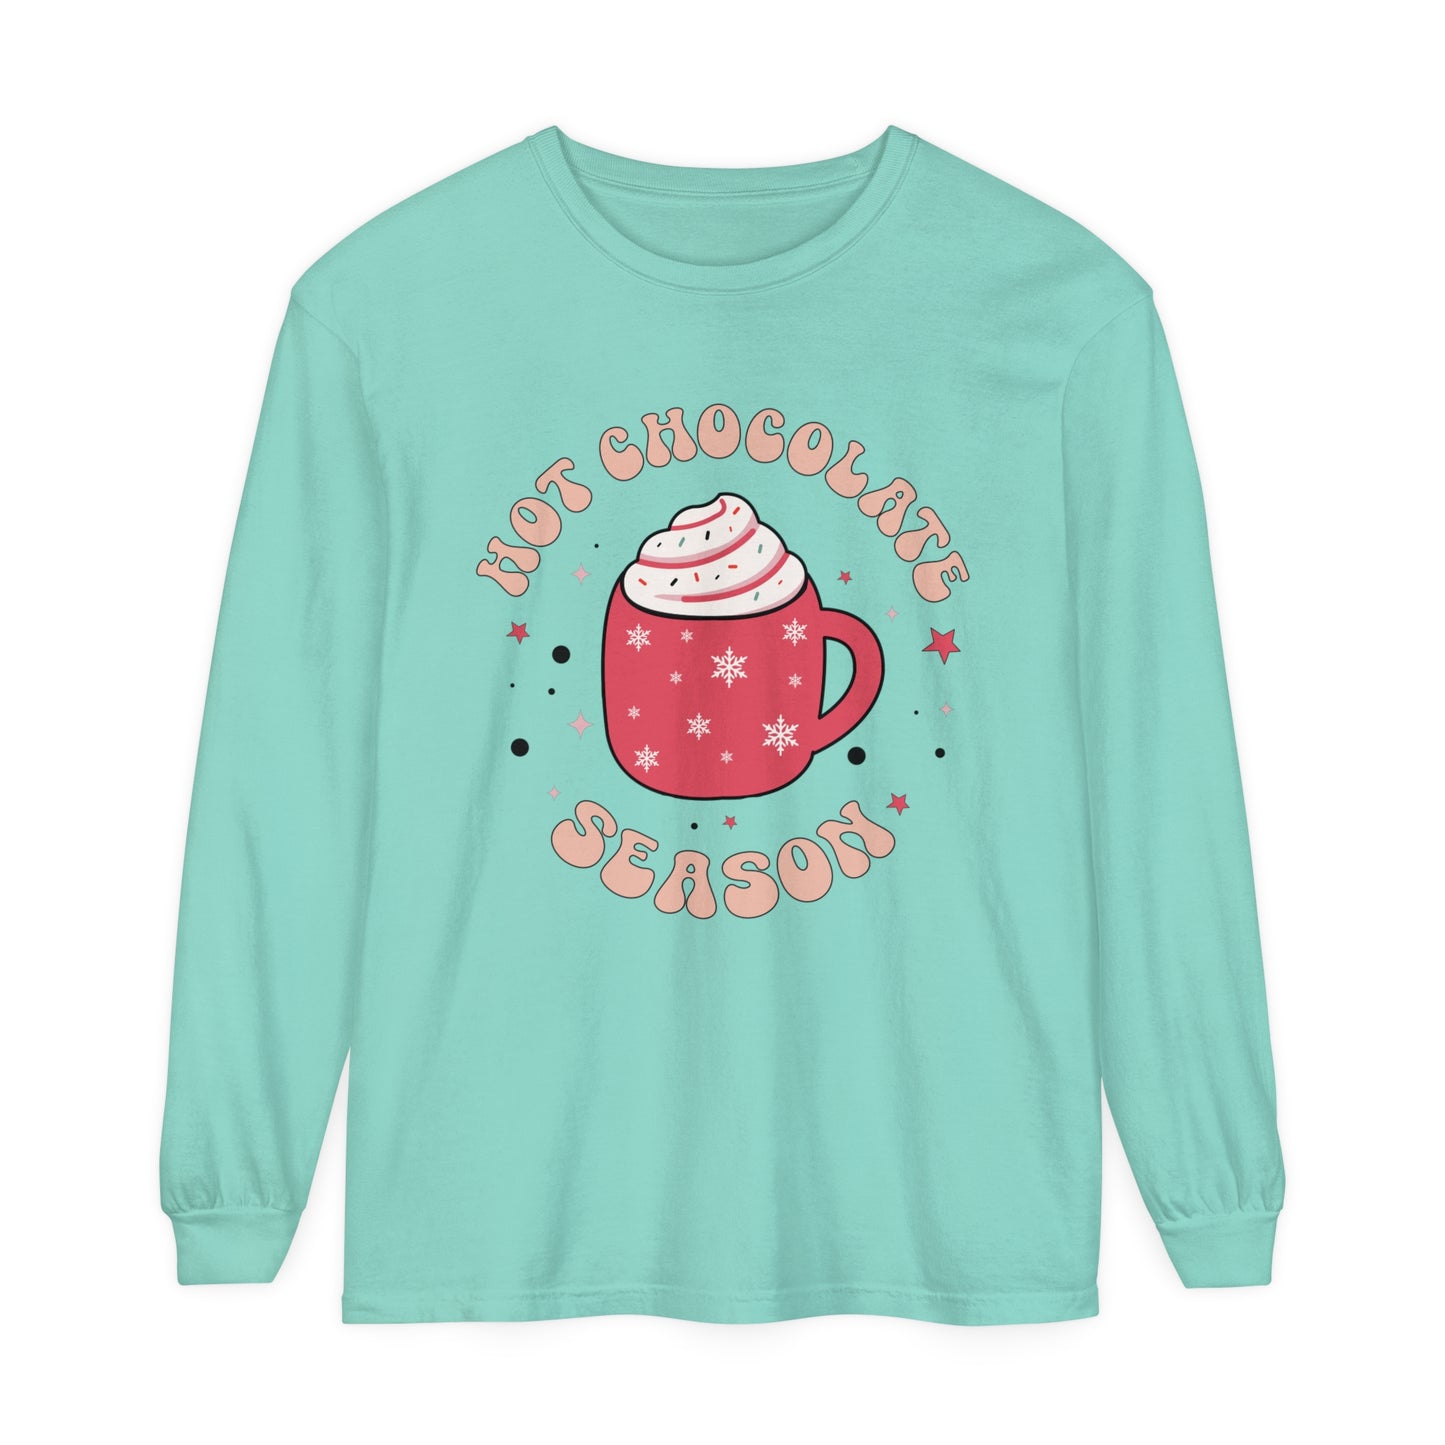 Hot Chocolate Season Women's Loose Long Sleeve T-Shirt